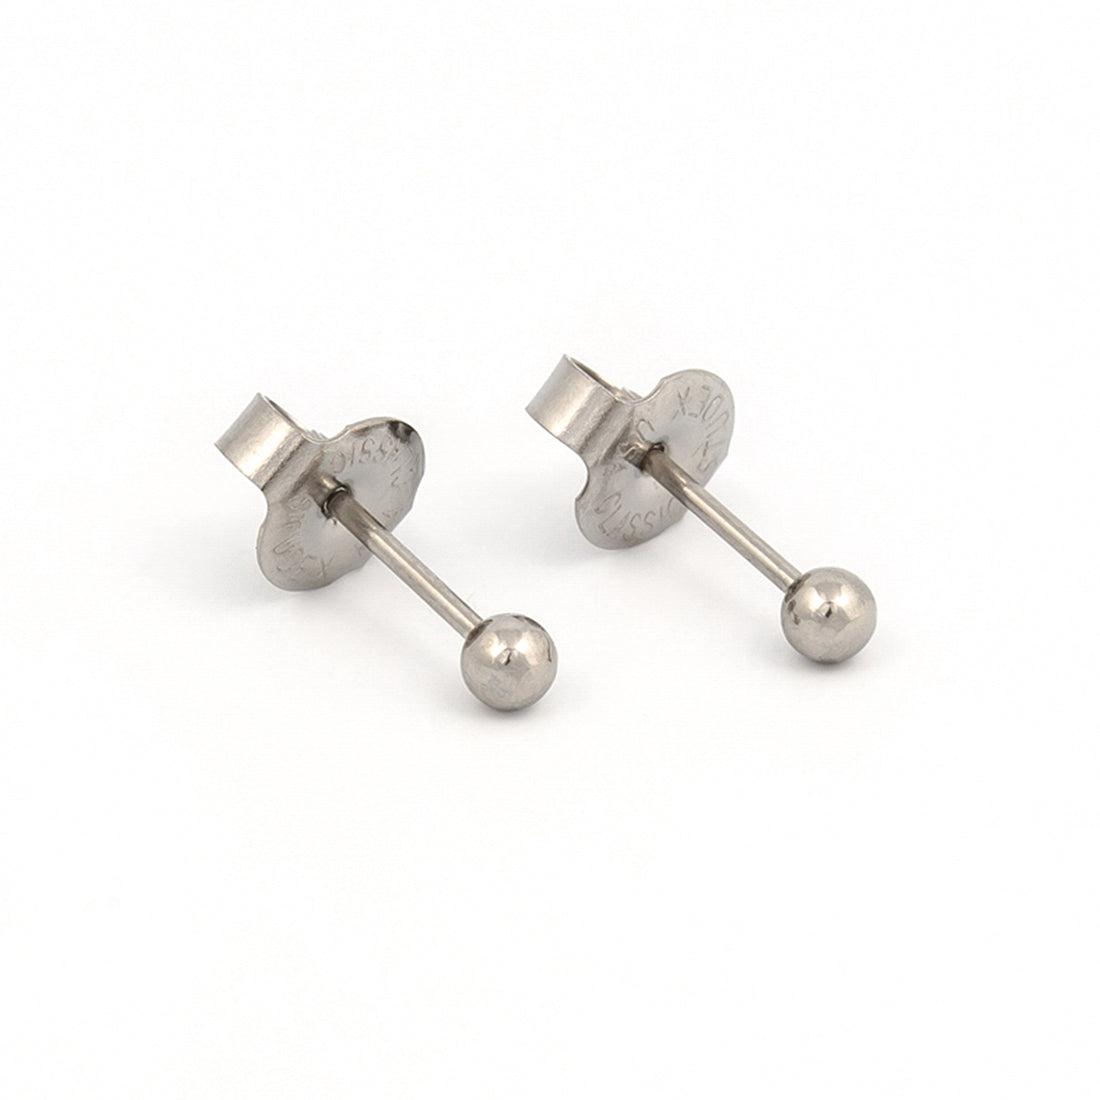 3MM Ball Allergy Free Stainless Steel Piercing Ear Stud